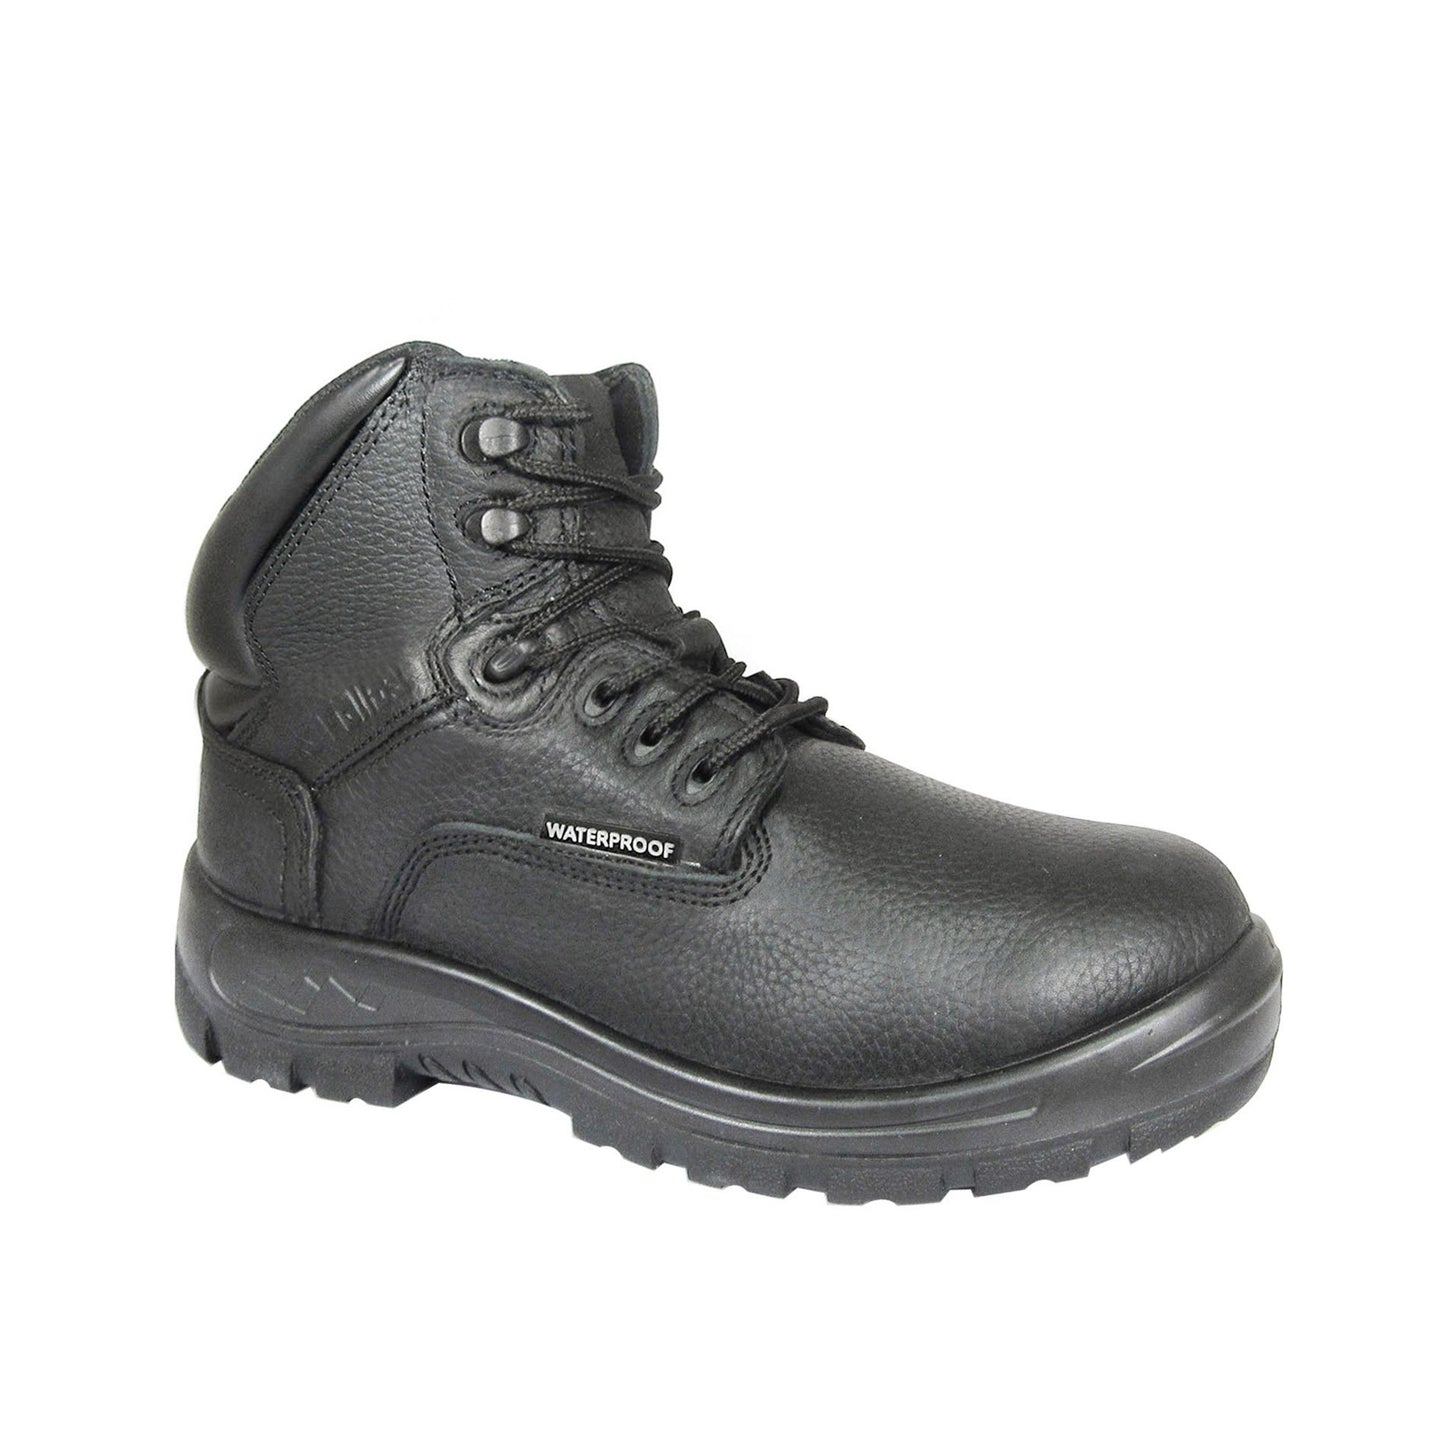 S-Fella 6050 6 Inch Waterproof Boot (Black)